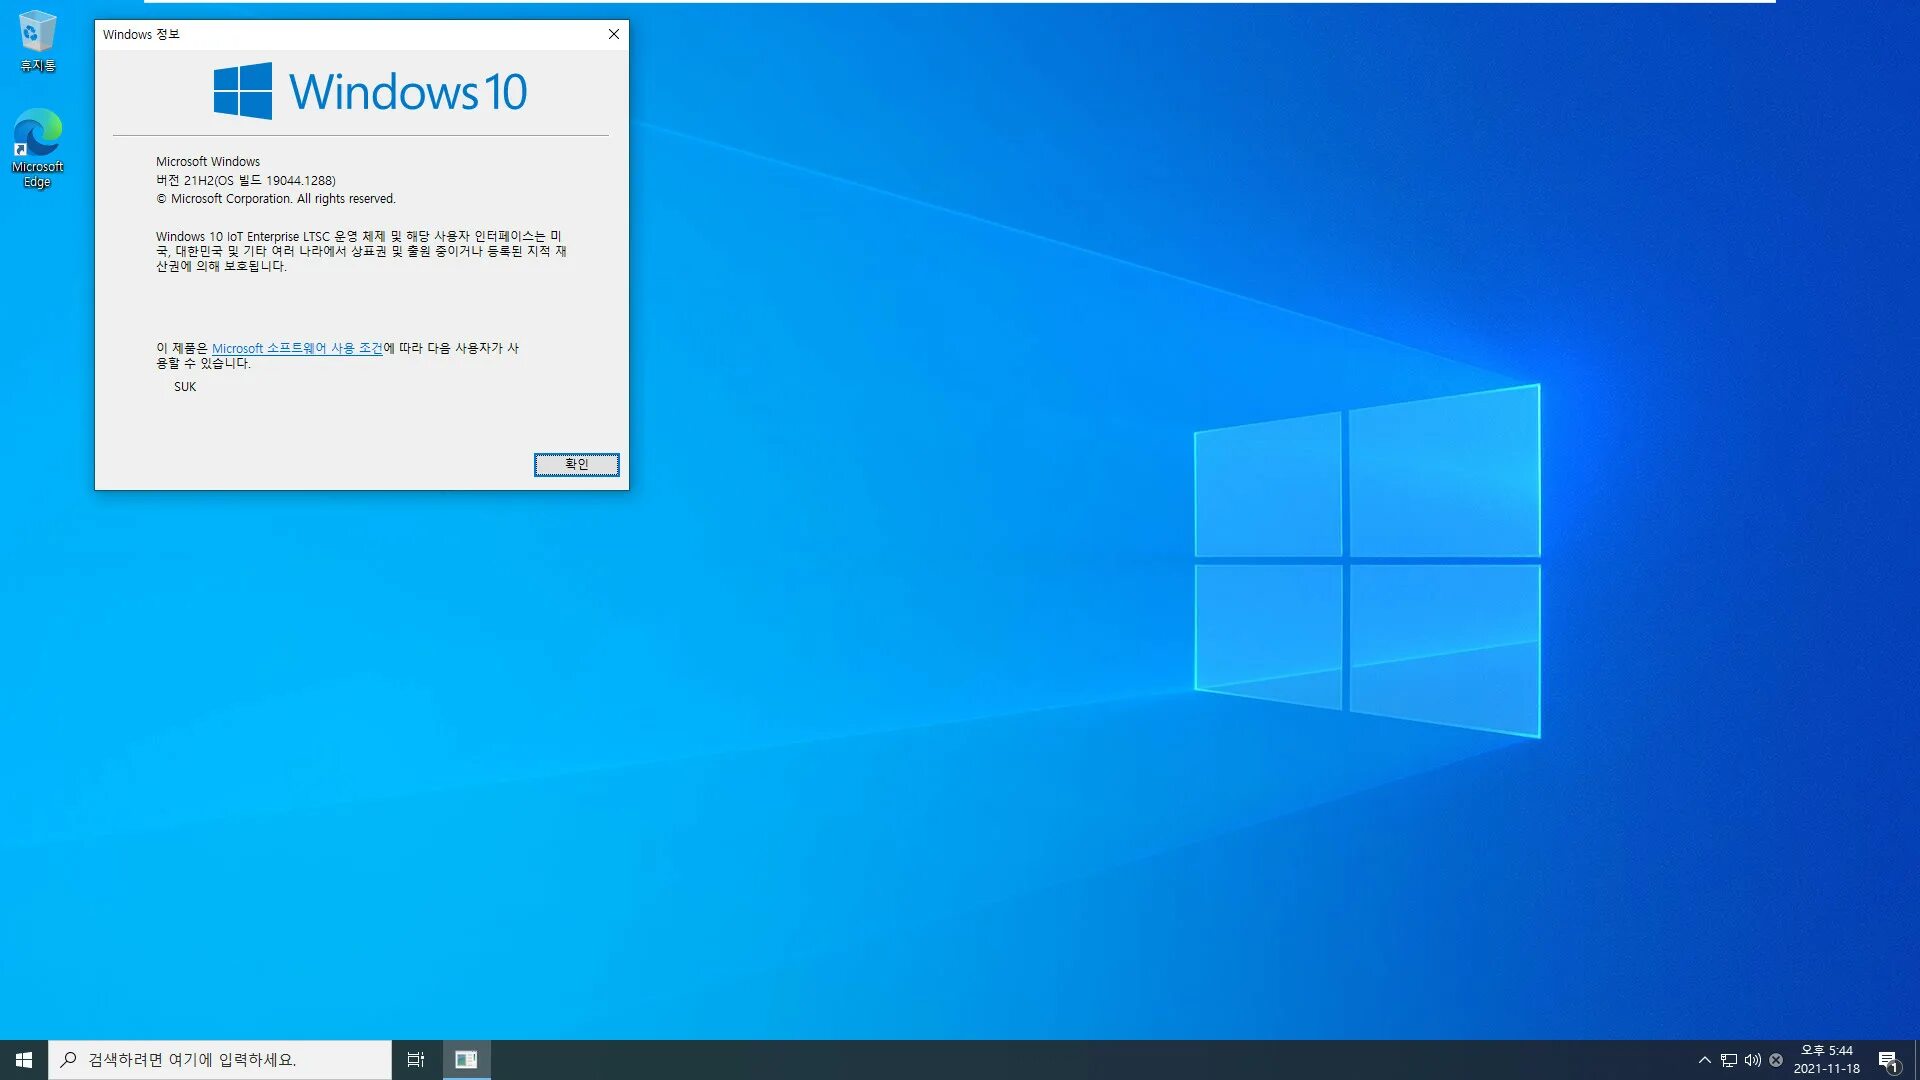 Windows 10 pro 22h2 sanlex. Виндовс 10 22h2. Windows 10, версия 22h2. Windows 10 2022 l версия 22h2. Windows 10 Pro 22h2.